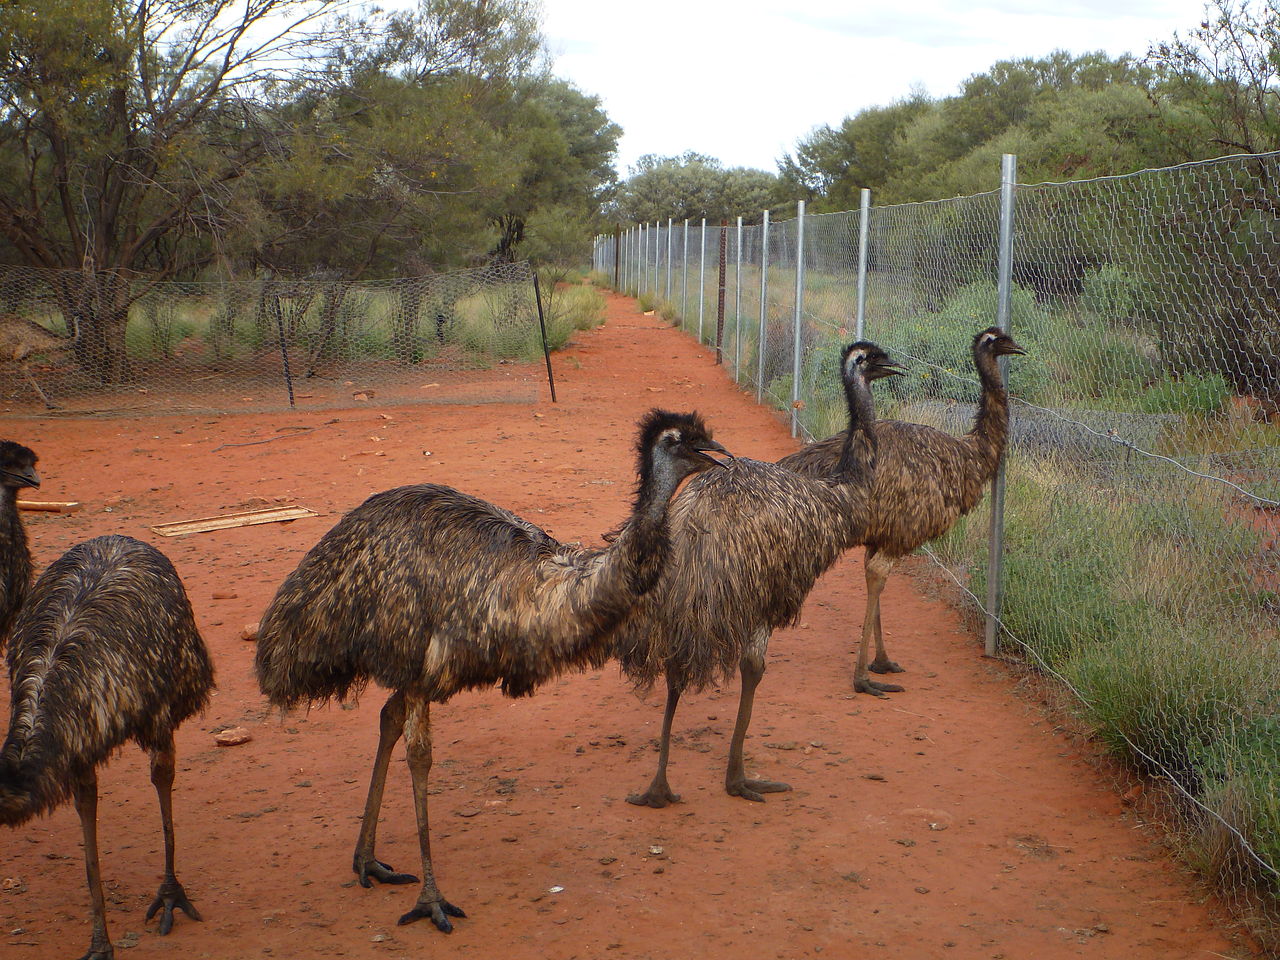 Emu på gården